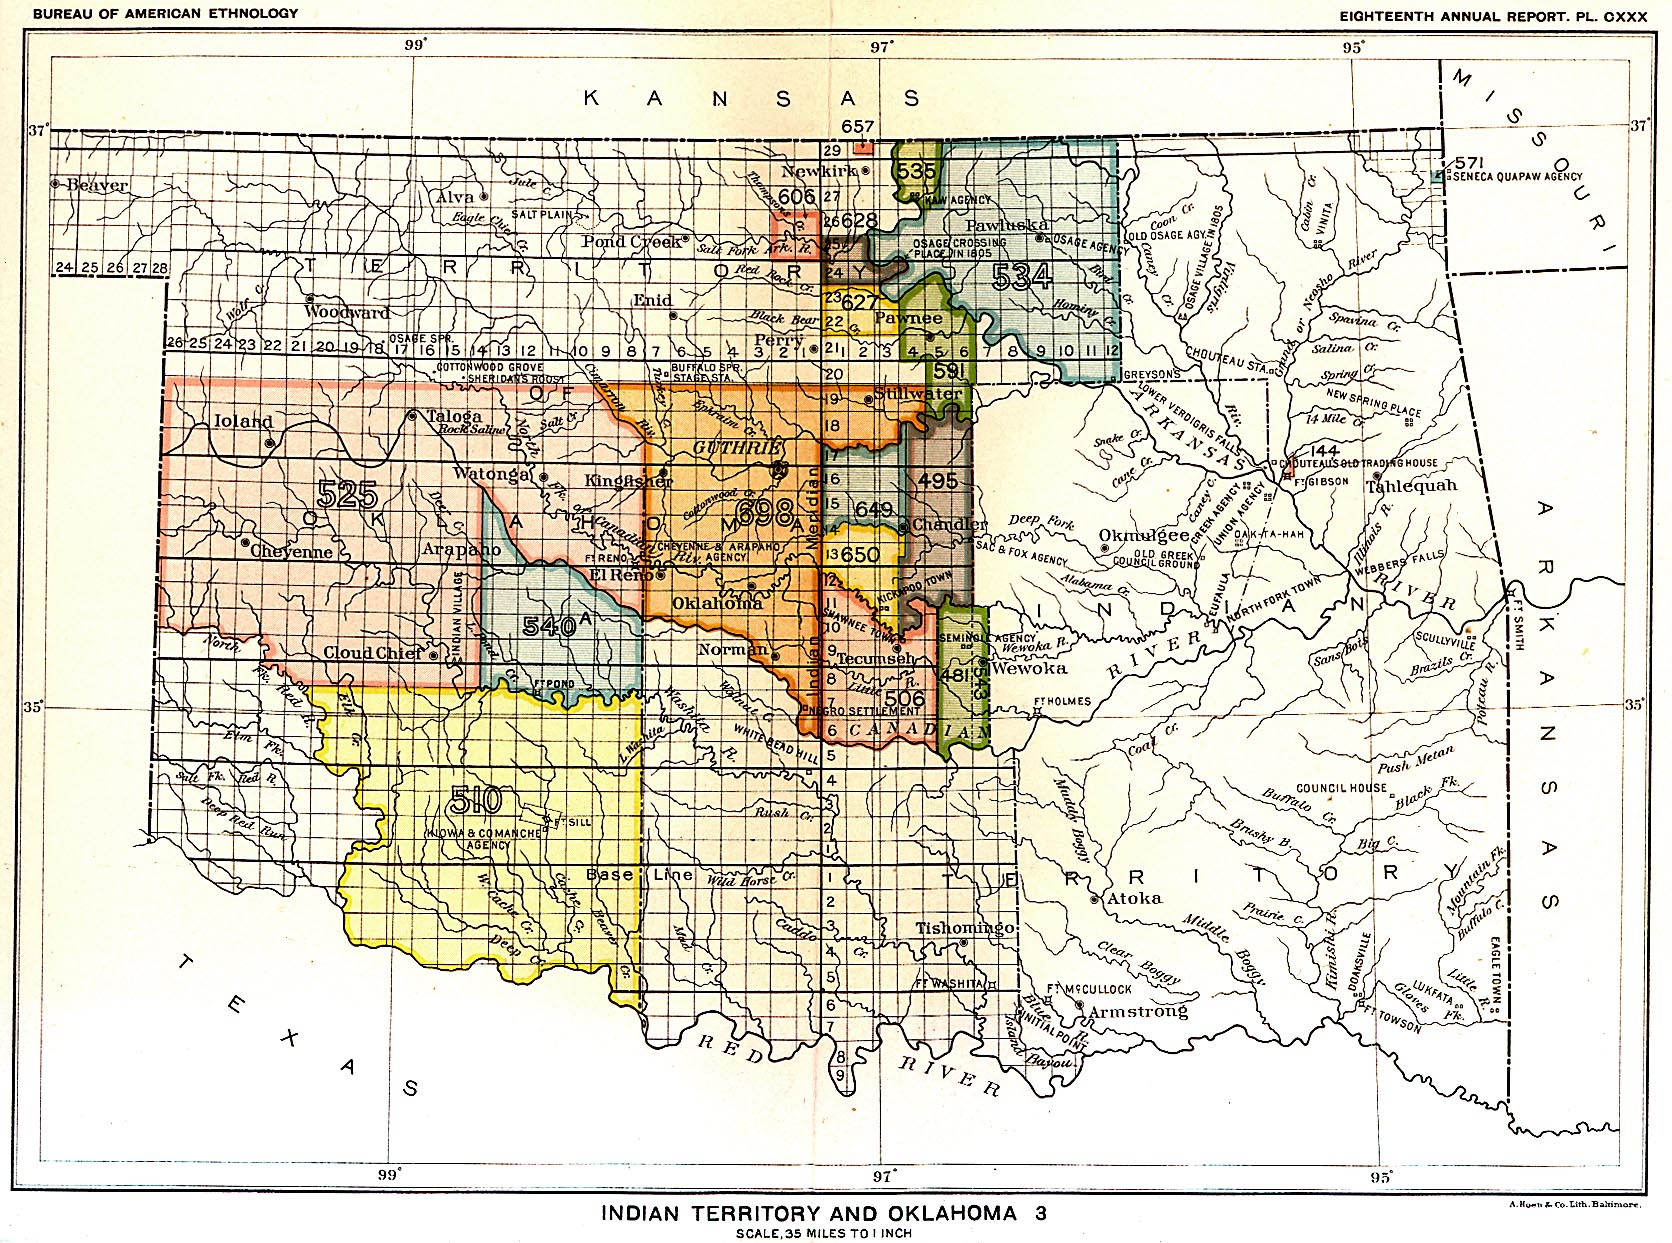  Indian Territory & Oklahoma 3, Map 
23